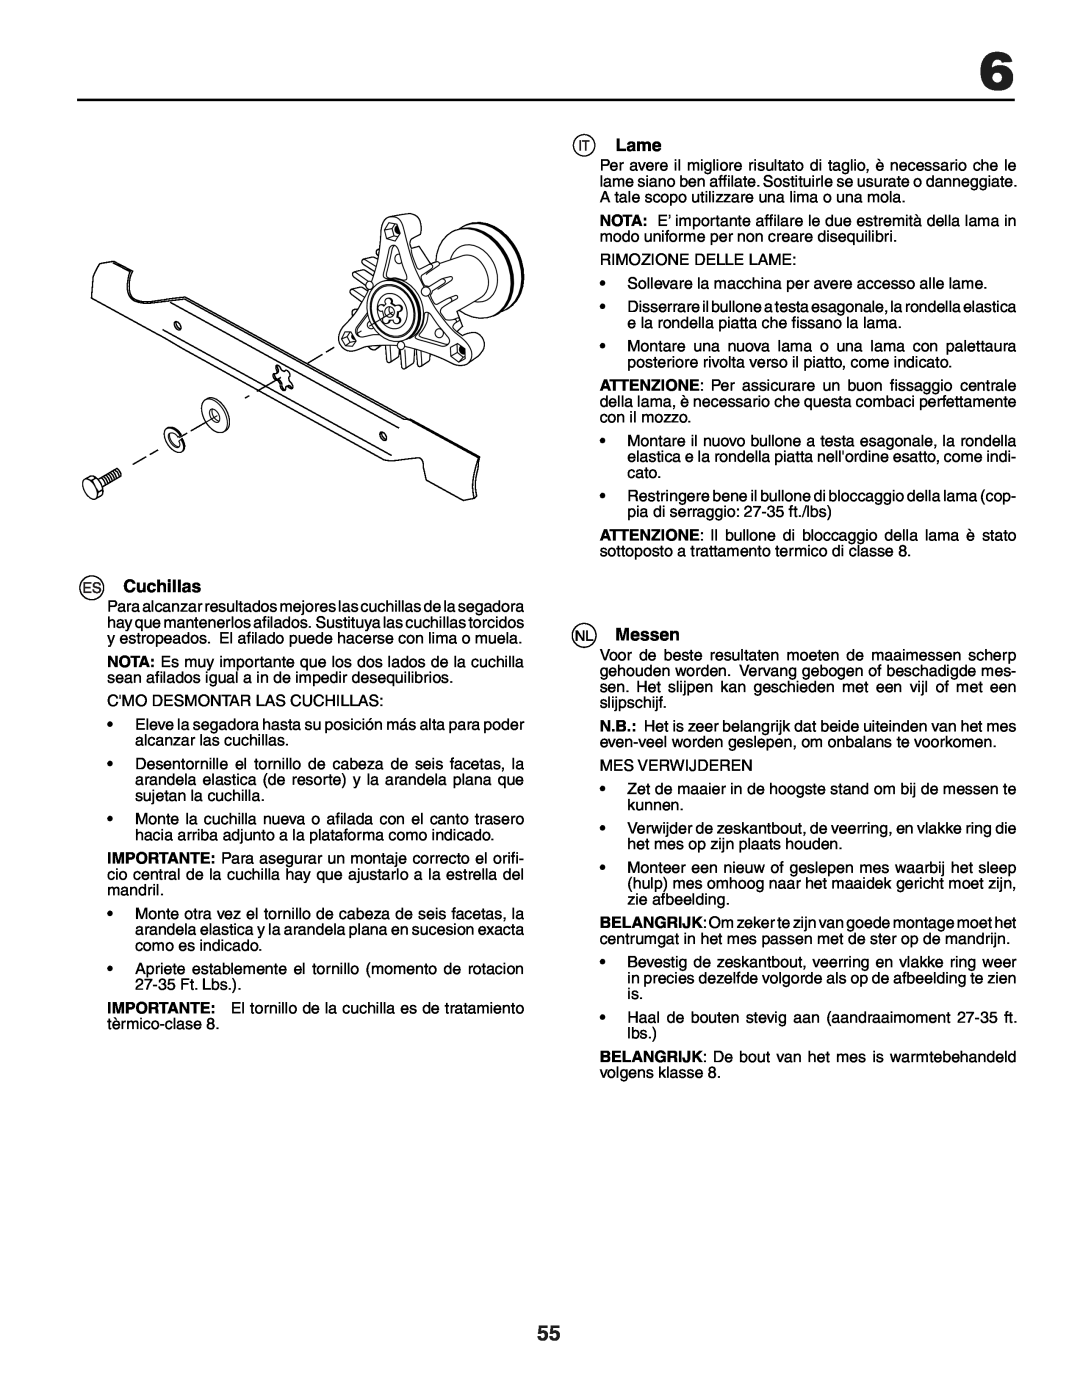 Husqvarna YTH151 instruction manual Cuchillas, Lame, Messen 